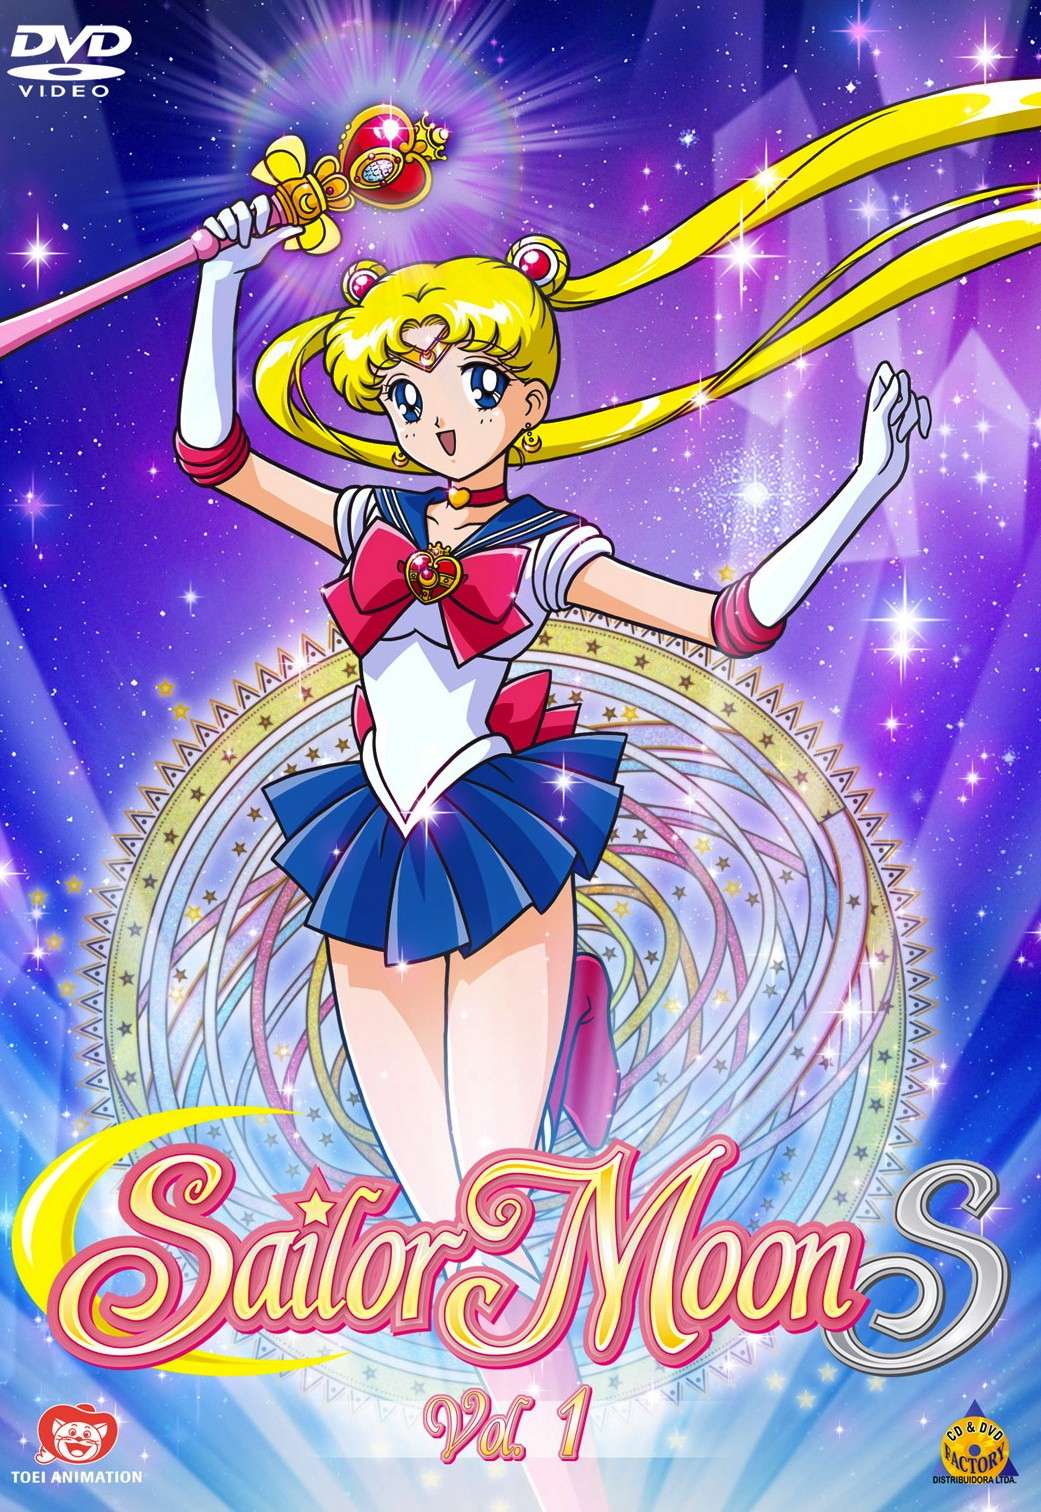 Bilder - Bunny Tsukino / Sailor Moon / Serenity - Bilder 54821910